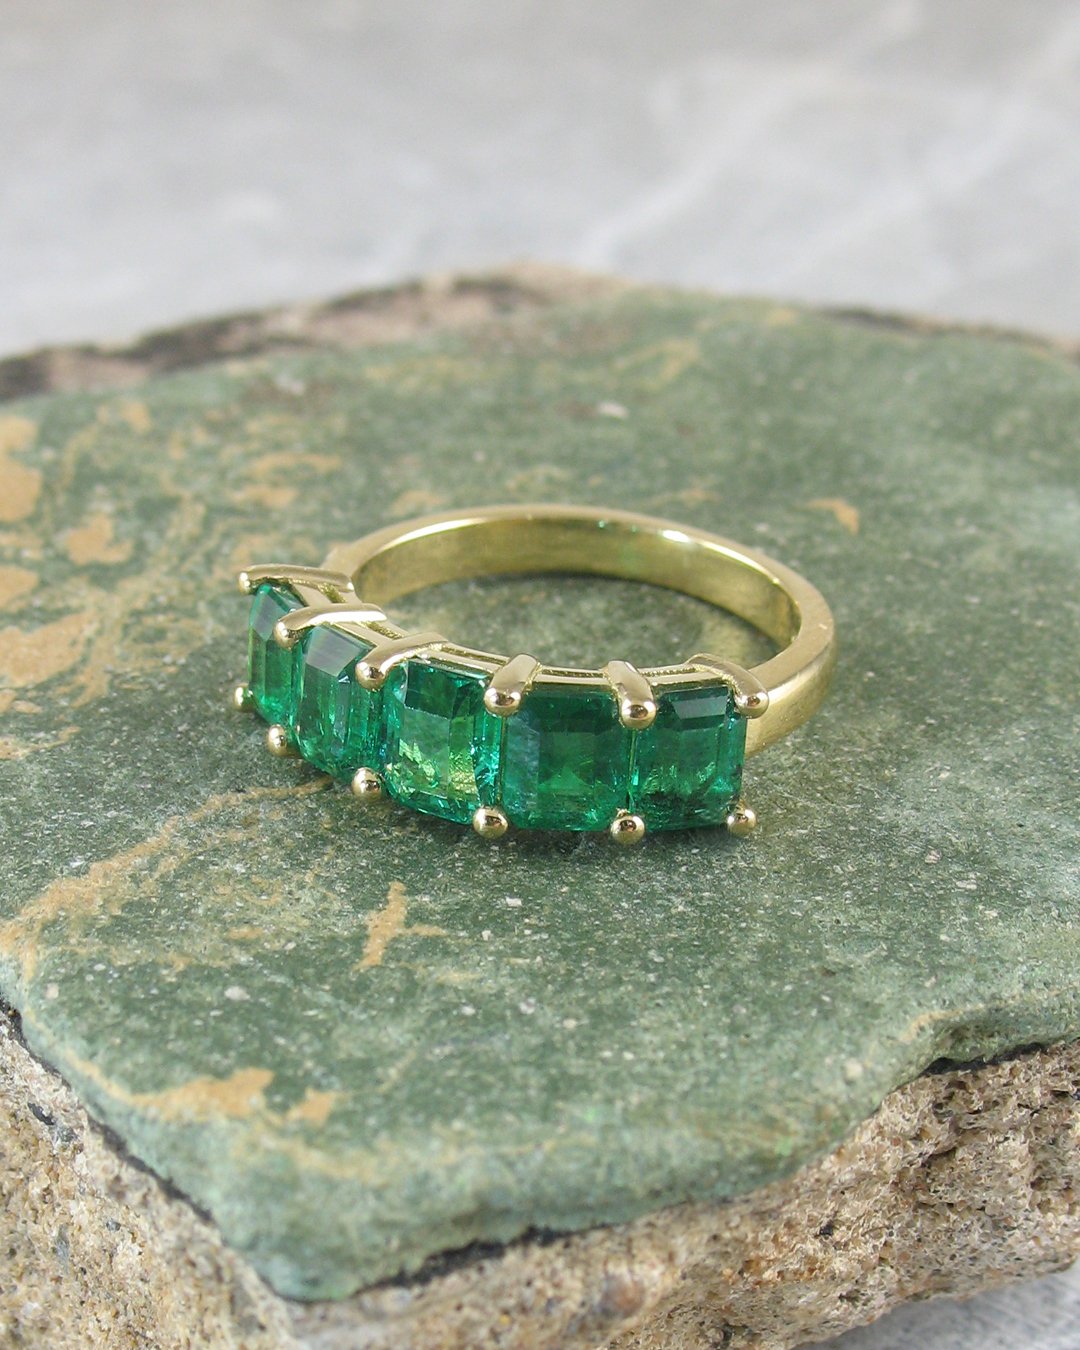 A beautiful five stone emerald ring